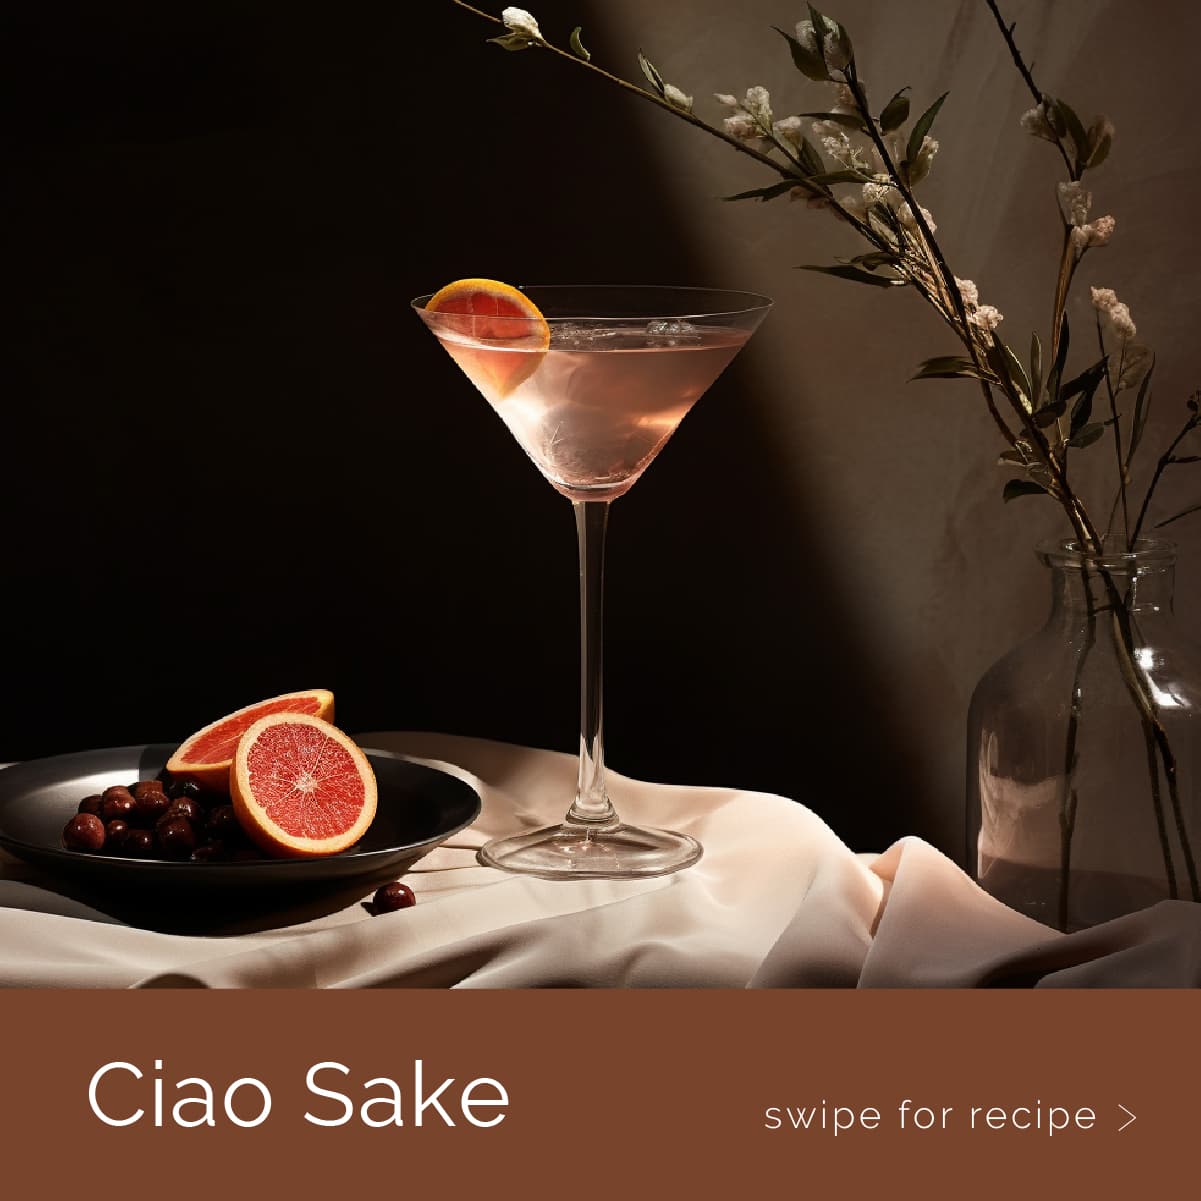 A Ciao Sake cocktail